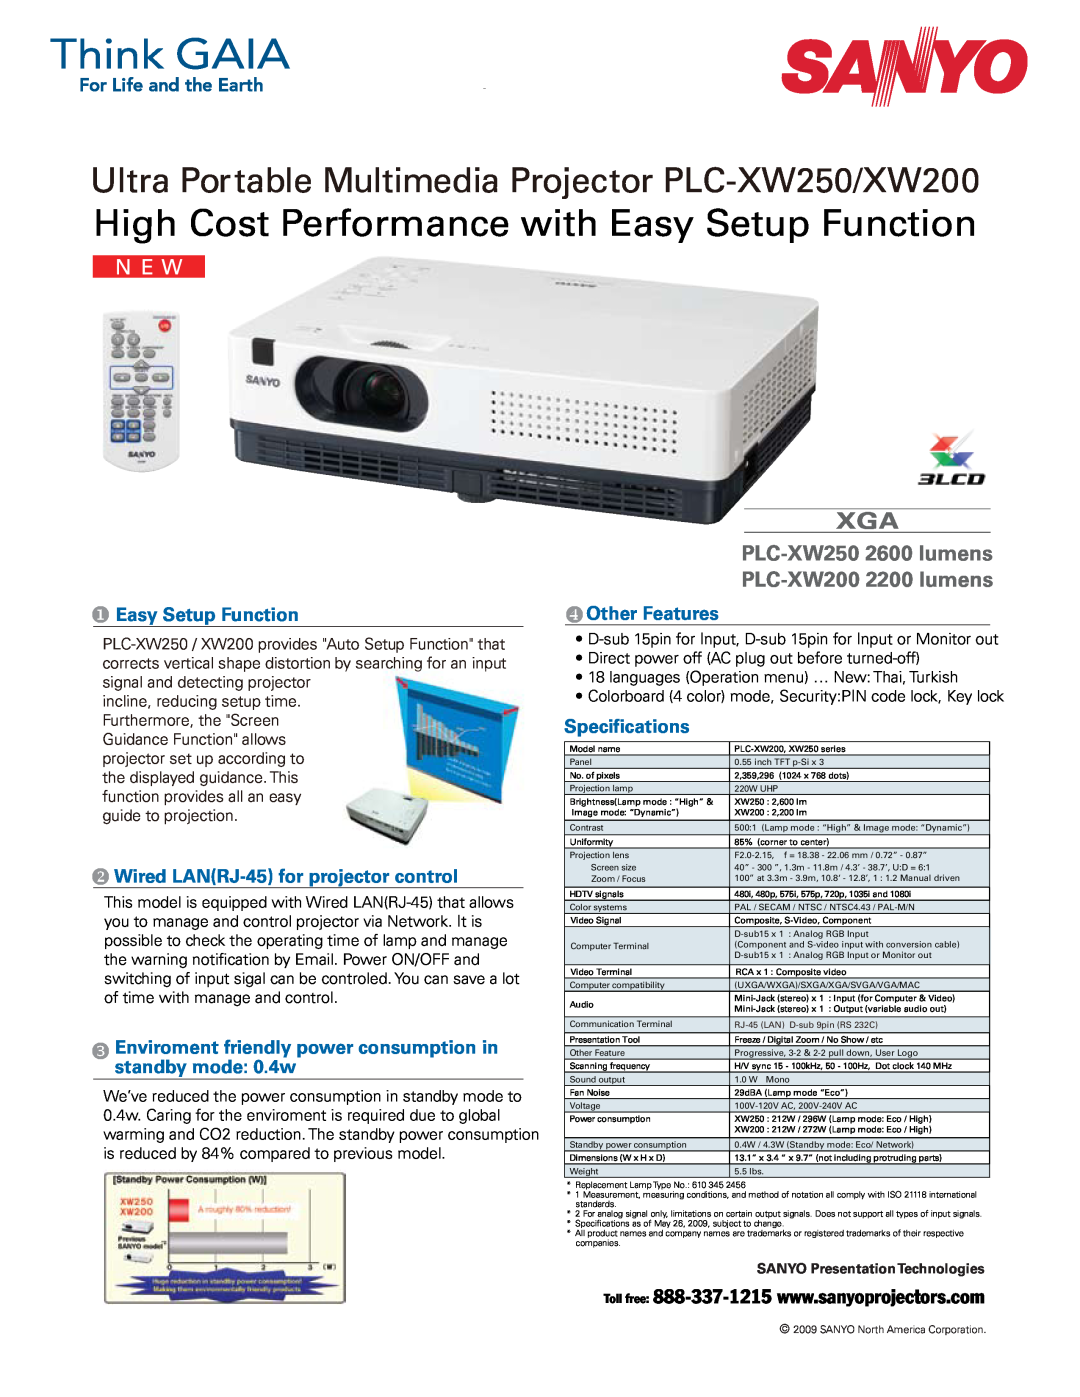 Sanyo specifications PLC-XW250/200, S p e c i f i c a t i o n s, XGA Ultraportable Multimedia Projector 